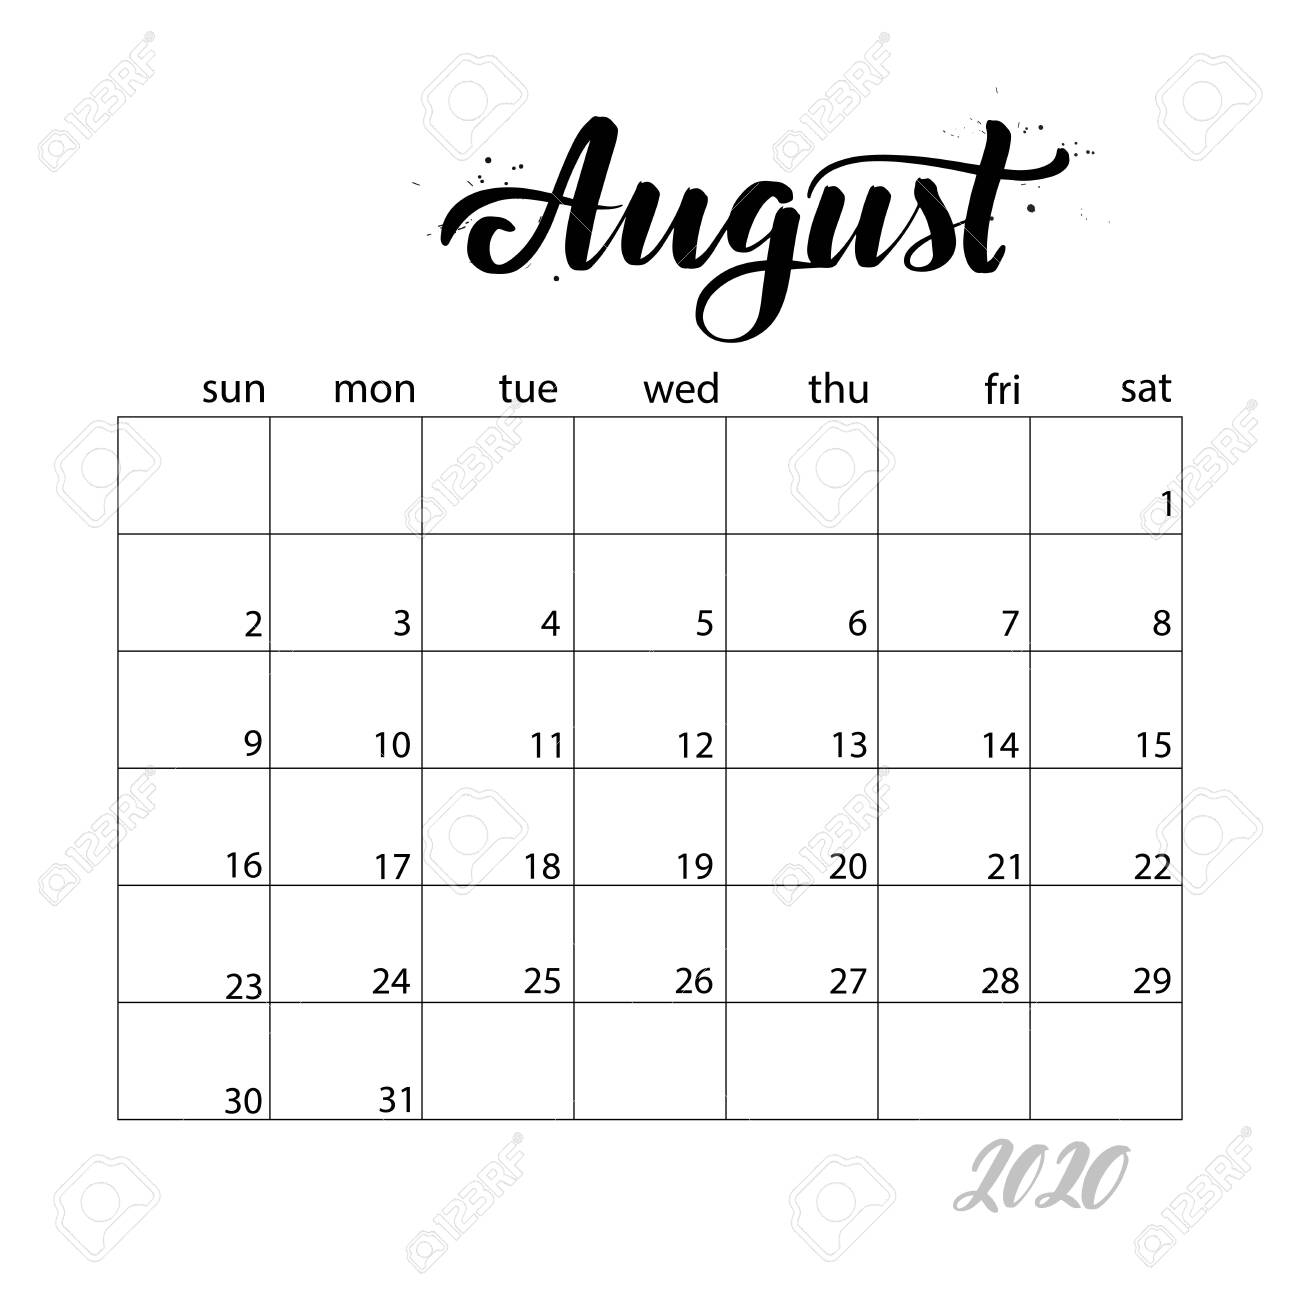 August. Monthly Calendar For 2020 Year. Handwritten Modern Calligraphy..